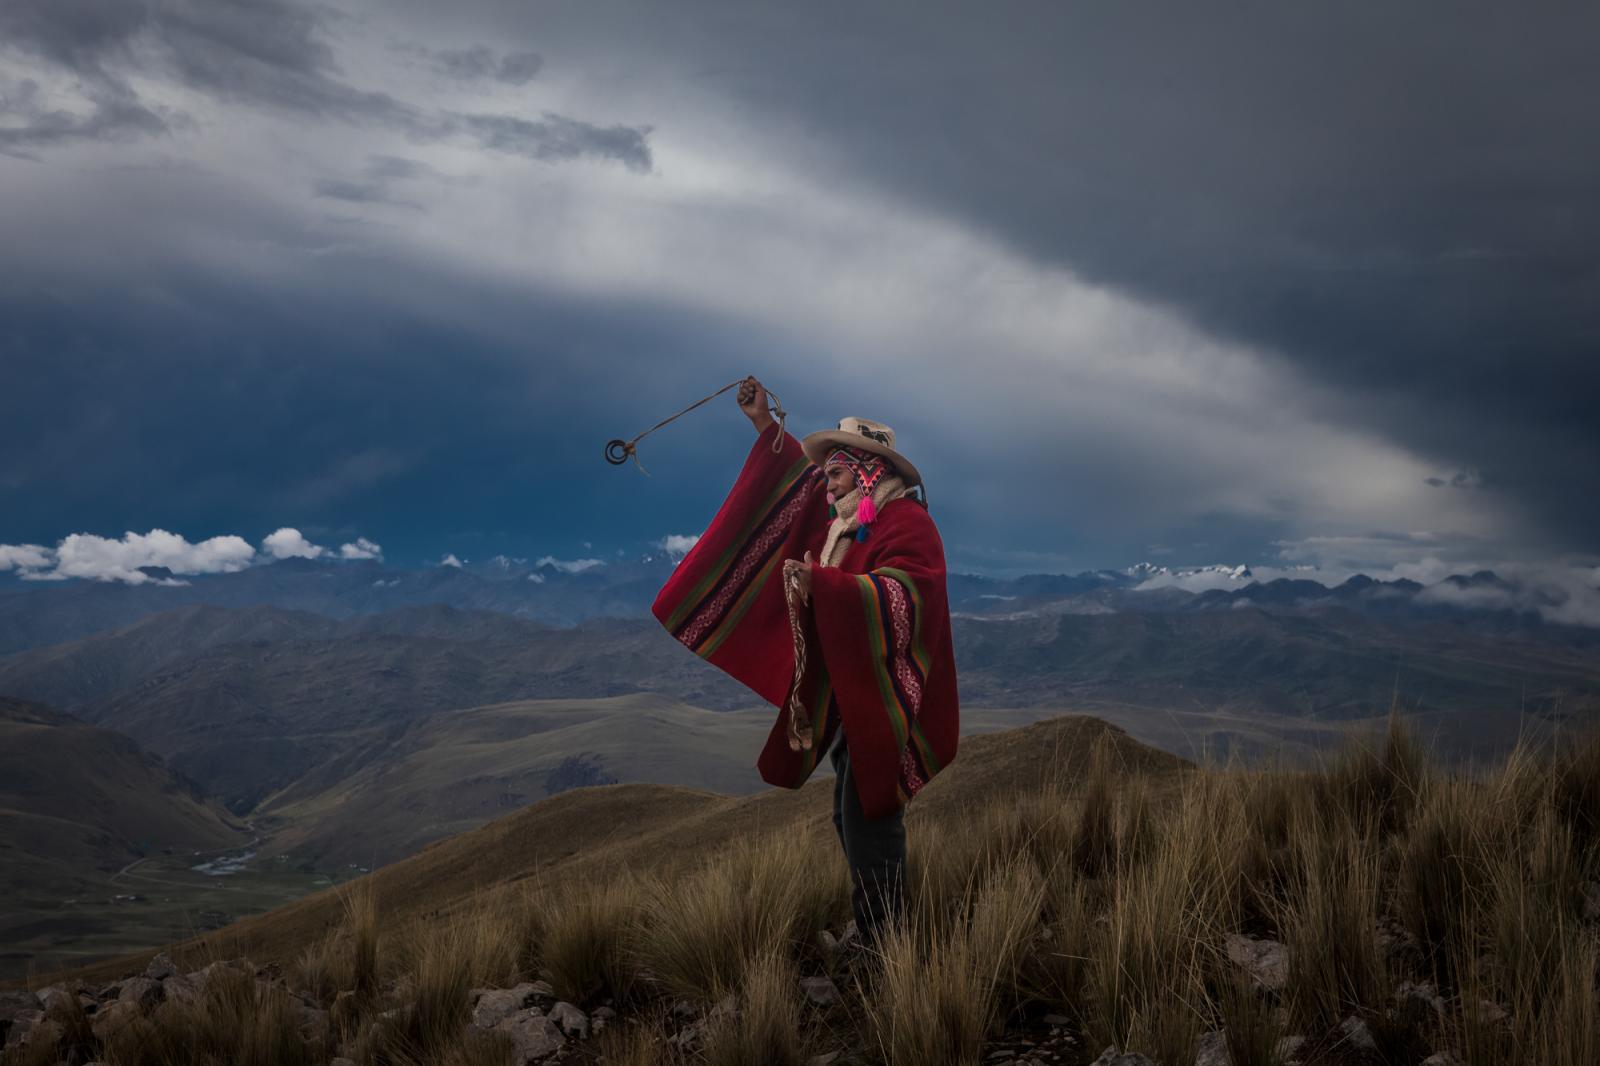 A man using a slingshot or huar... everything away. Chiaraje Peru